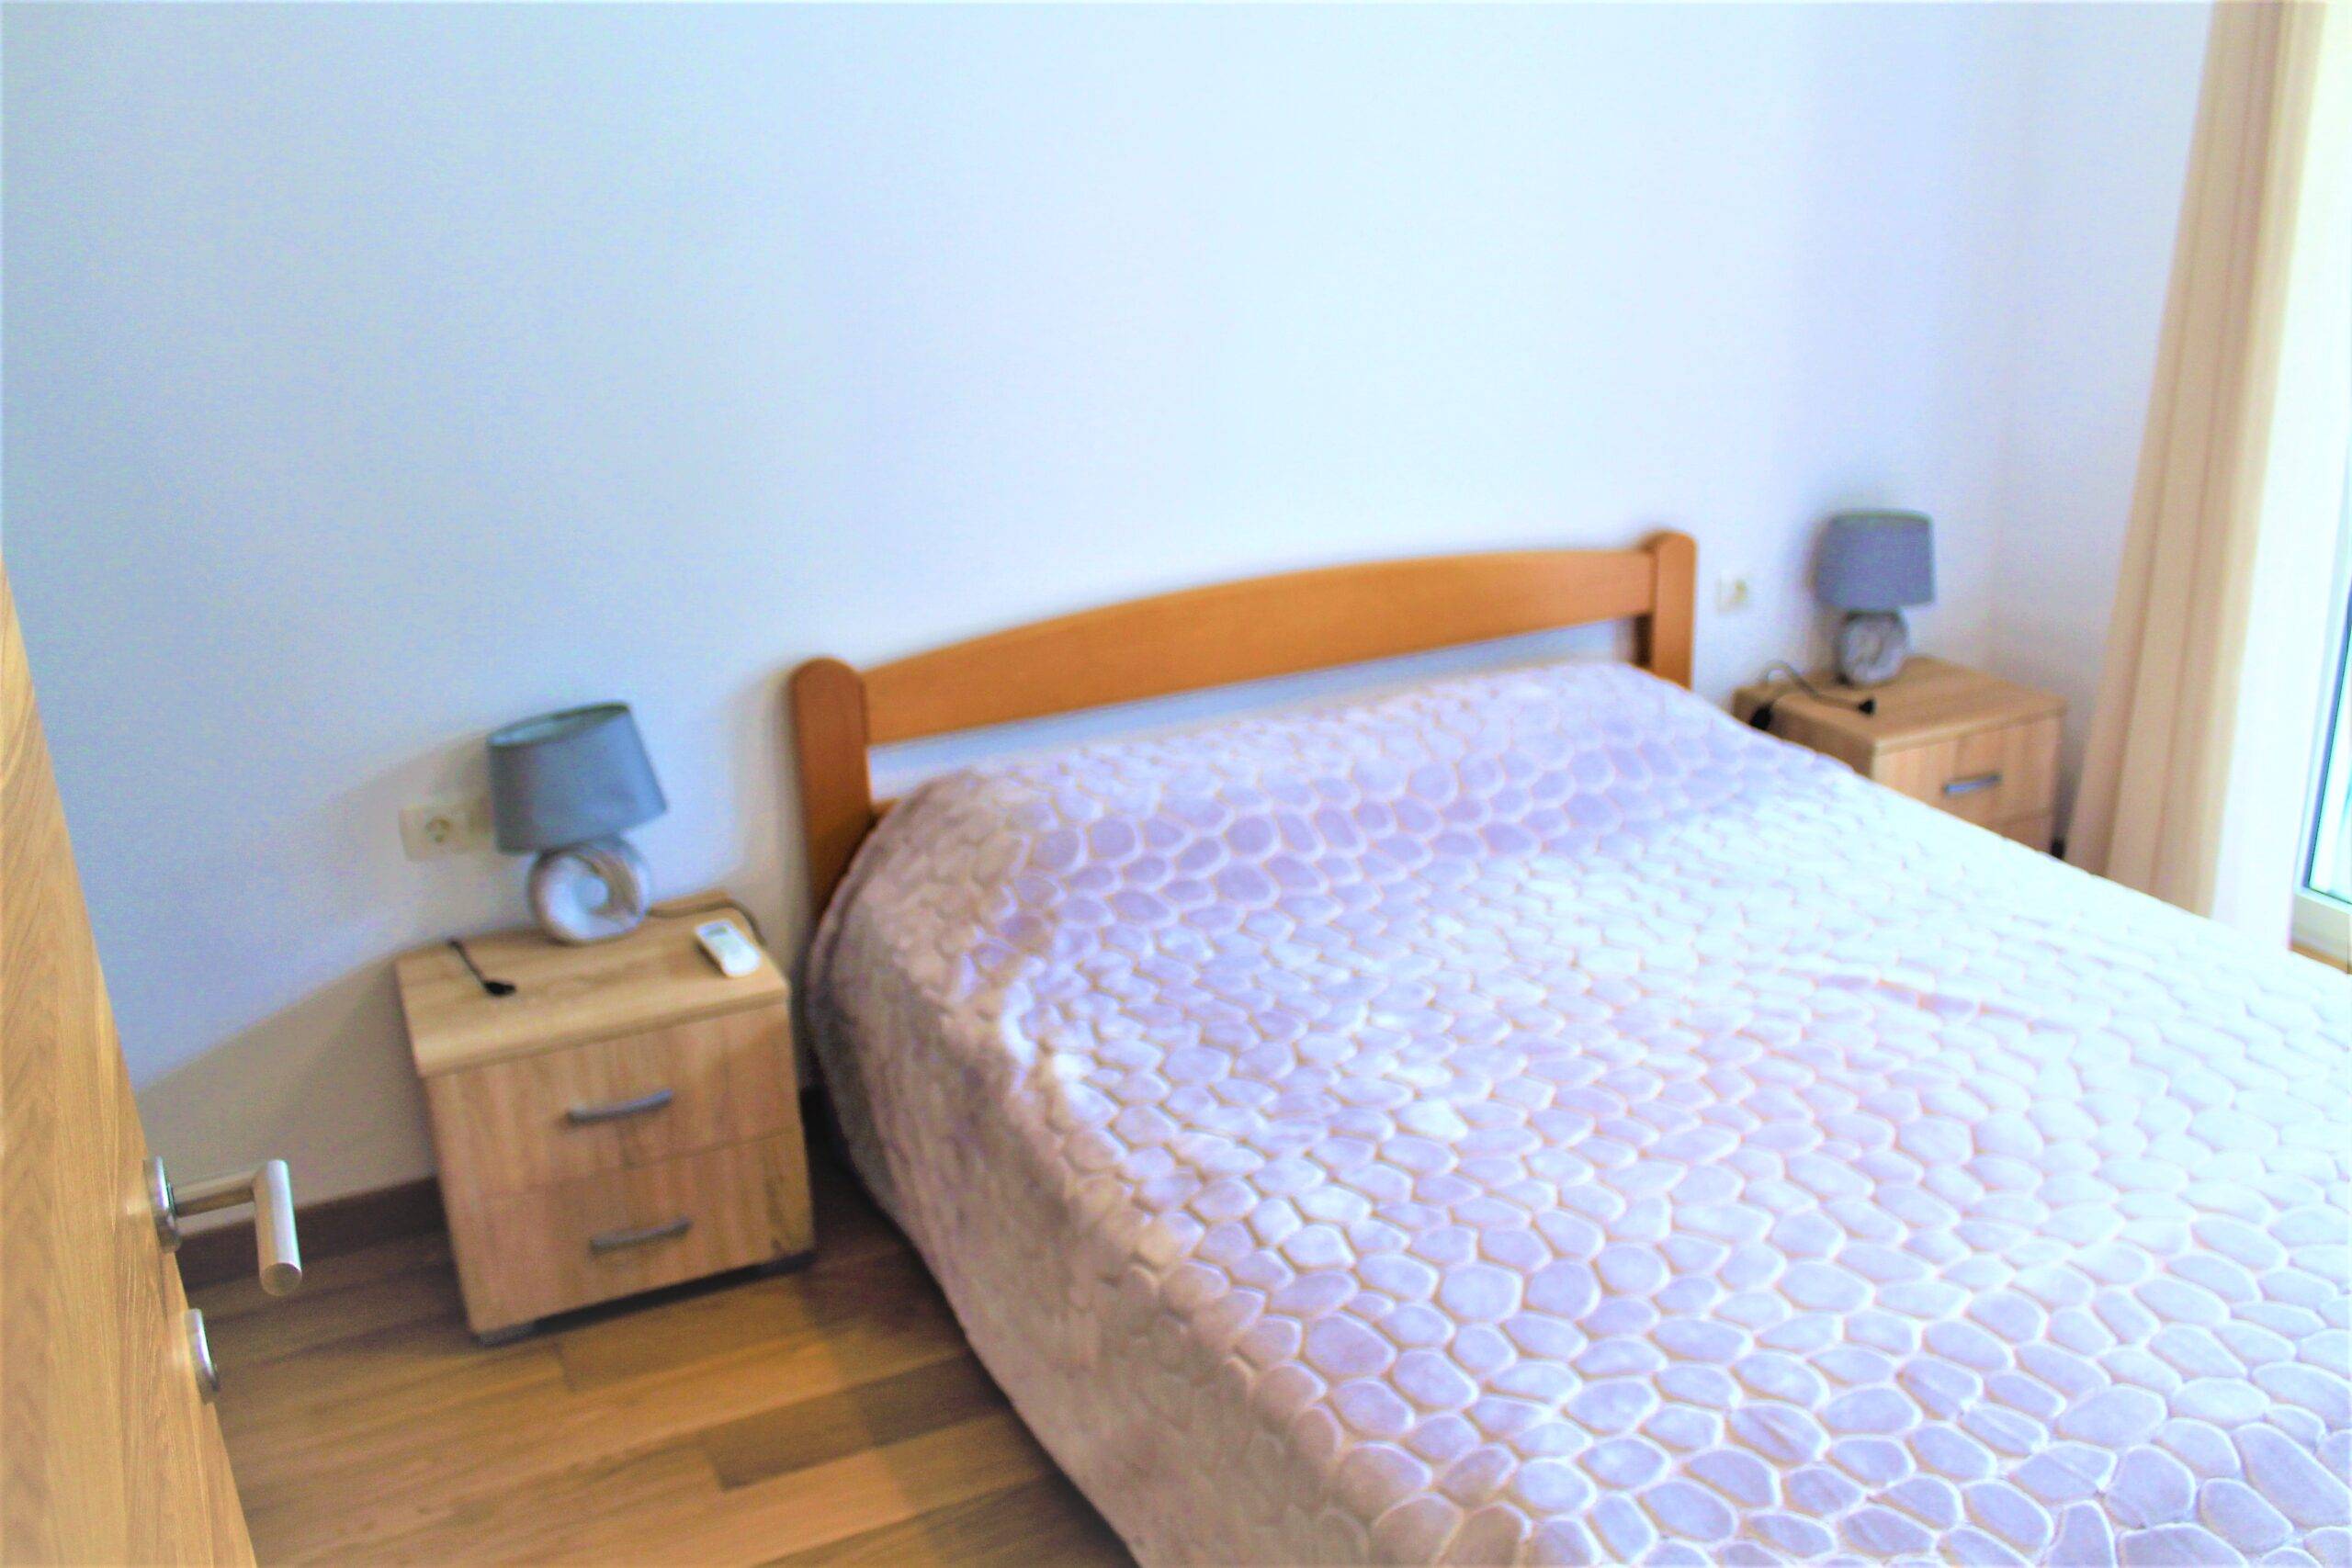 One bedroom apartment (45 sq m) in Budva.